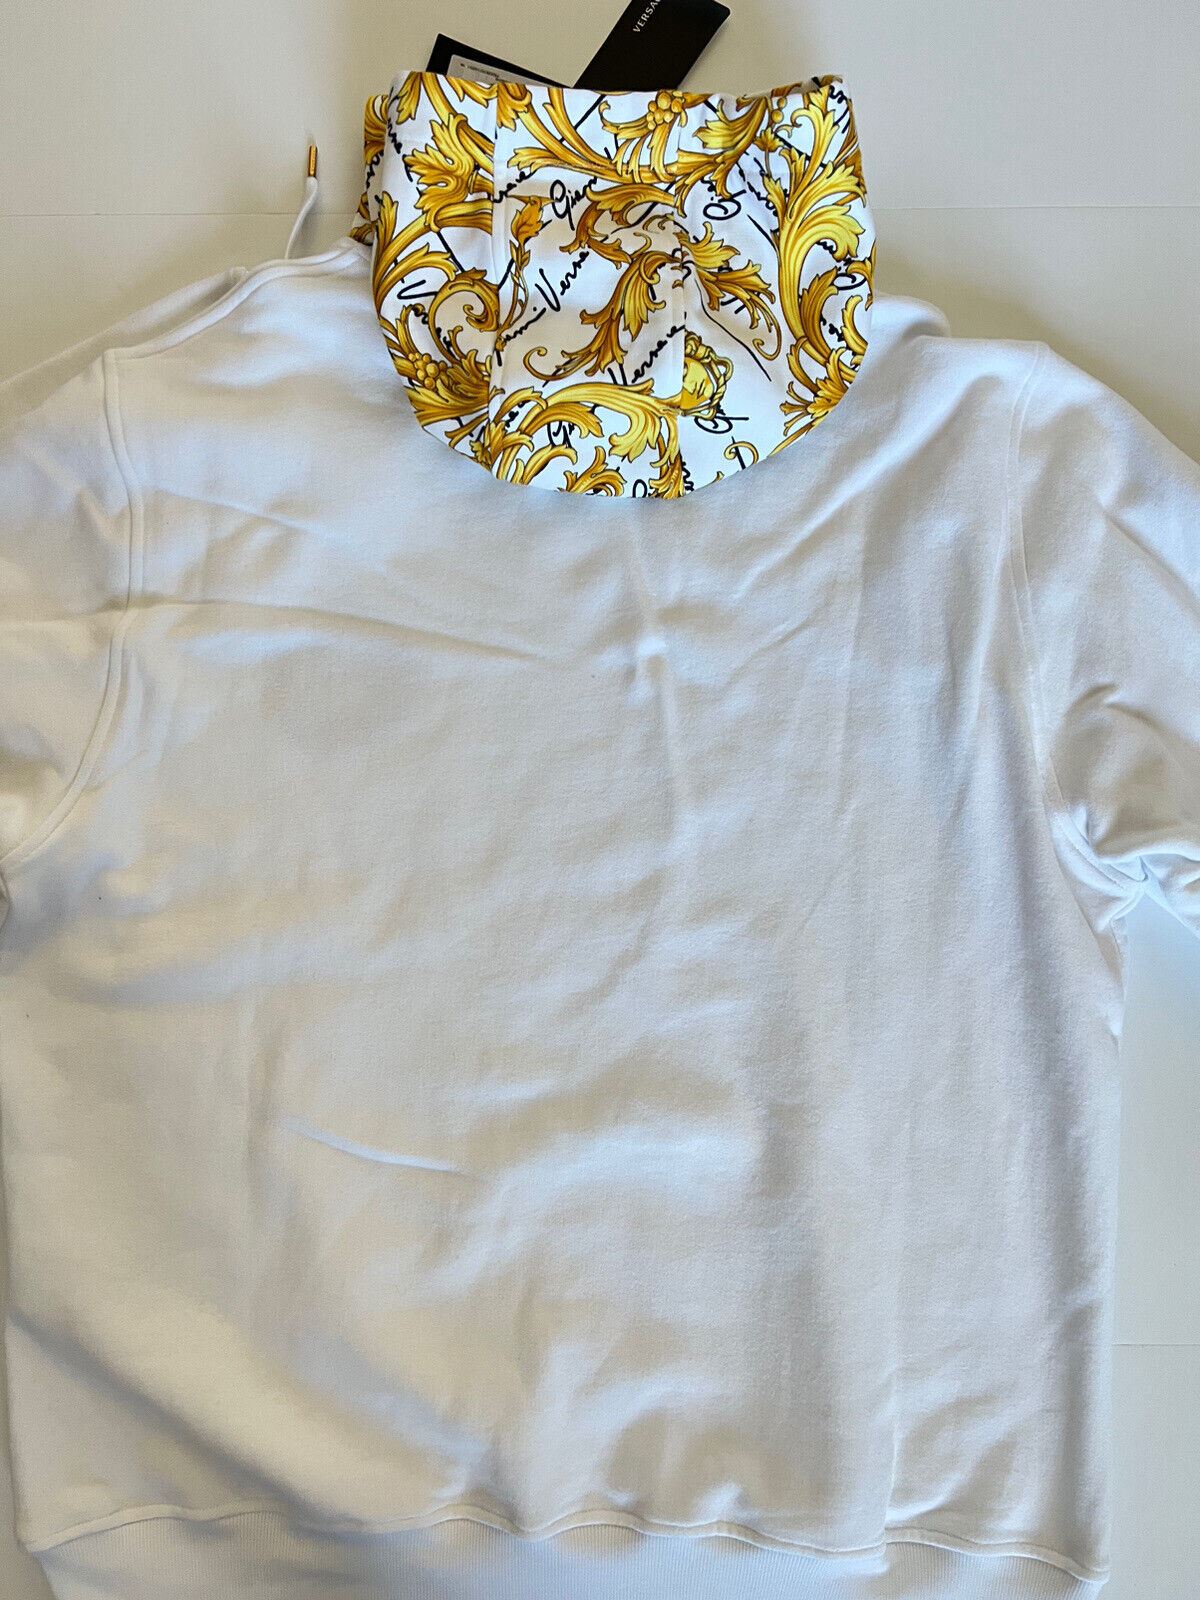 Neu mit Etikett: 1150 $ Versace Medusa Barock-Print-Sweatshirt mit Kapuze, Weiß 4XL 1003253 